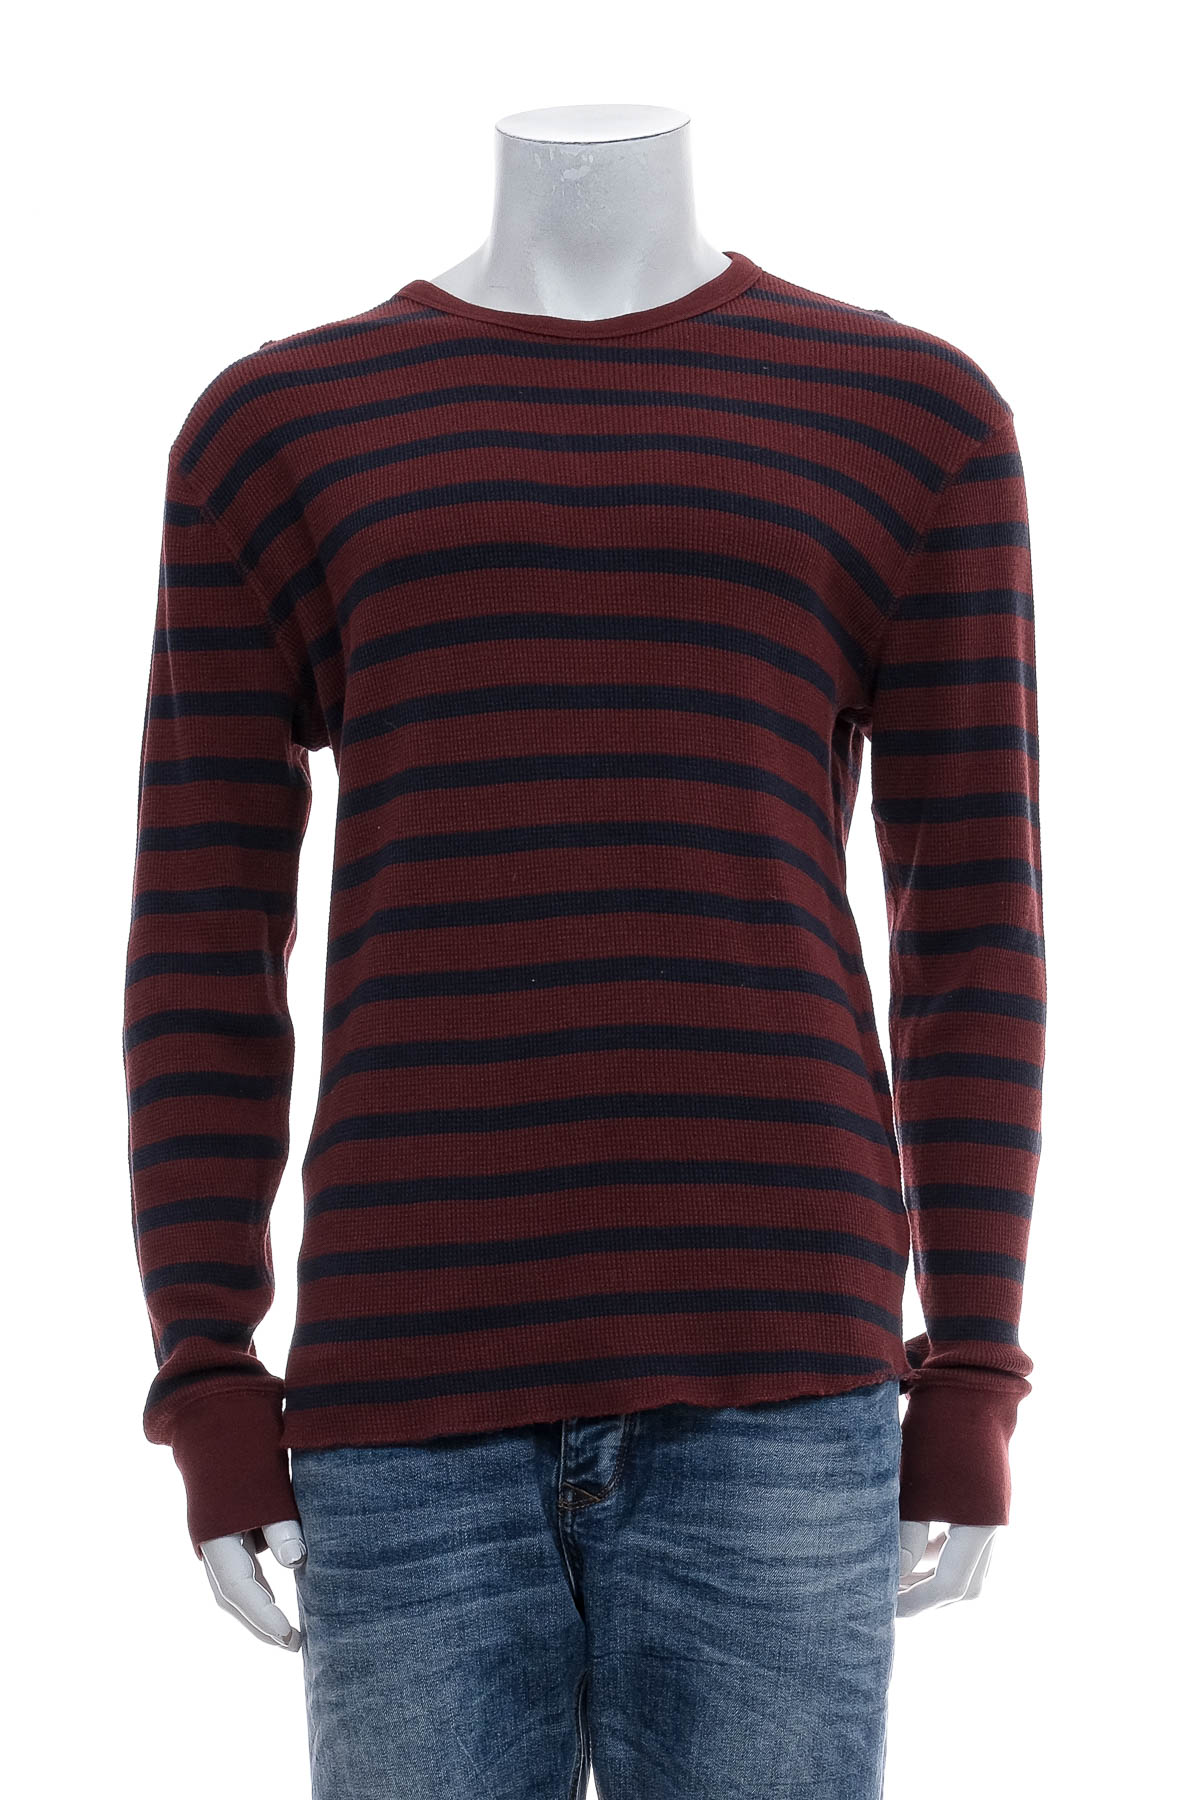 Men's sweater - Gap - 0